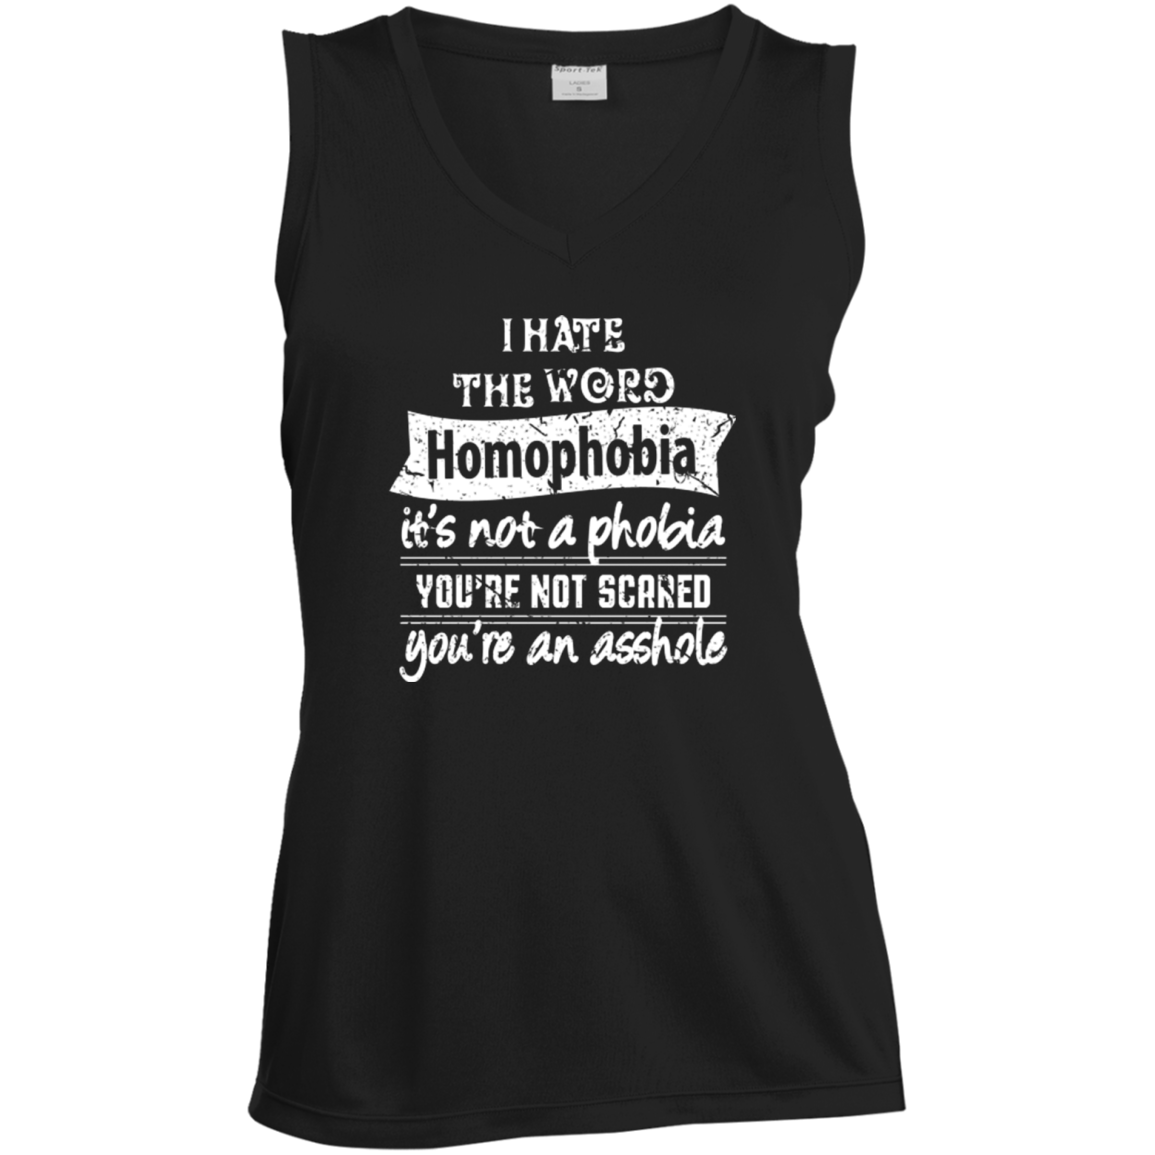 Anti Homophobia LGBT women sleeveless Shirt Gay pride ultra cotton tshirt for women